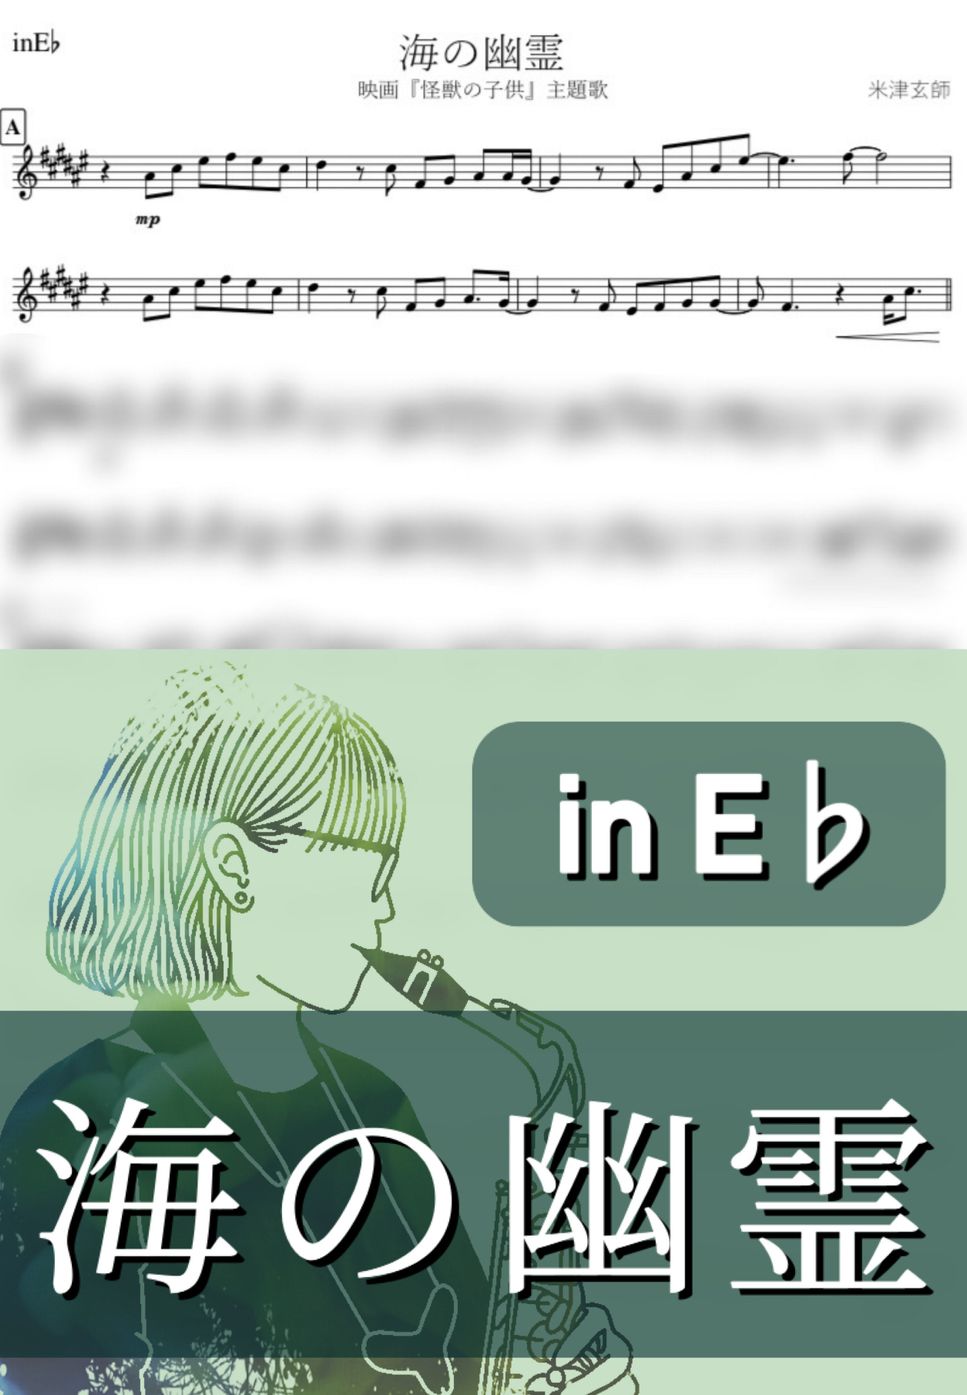 米津玄師 - 海の幽霊 (E♭) by kanamusic